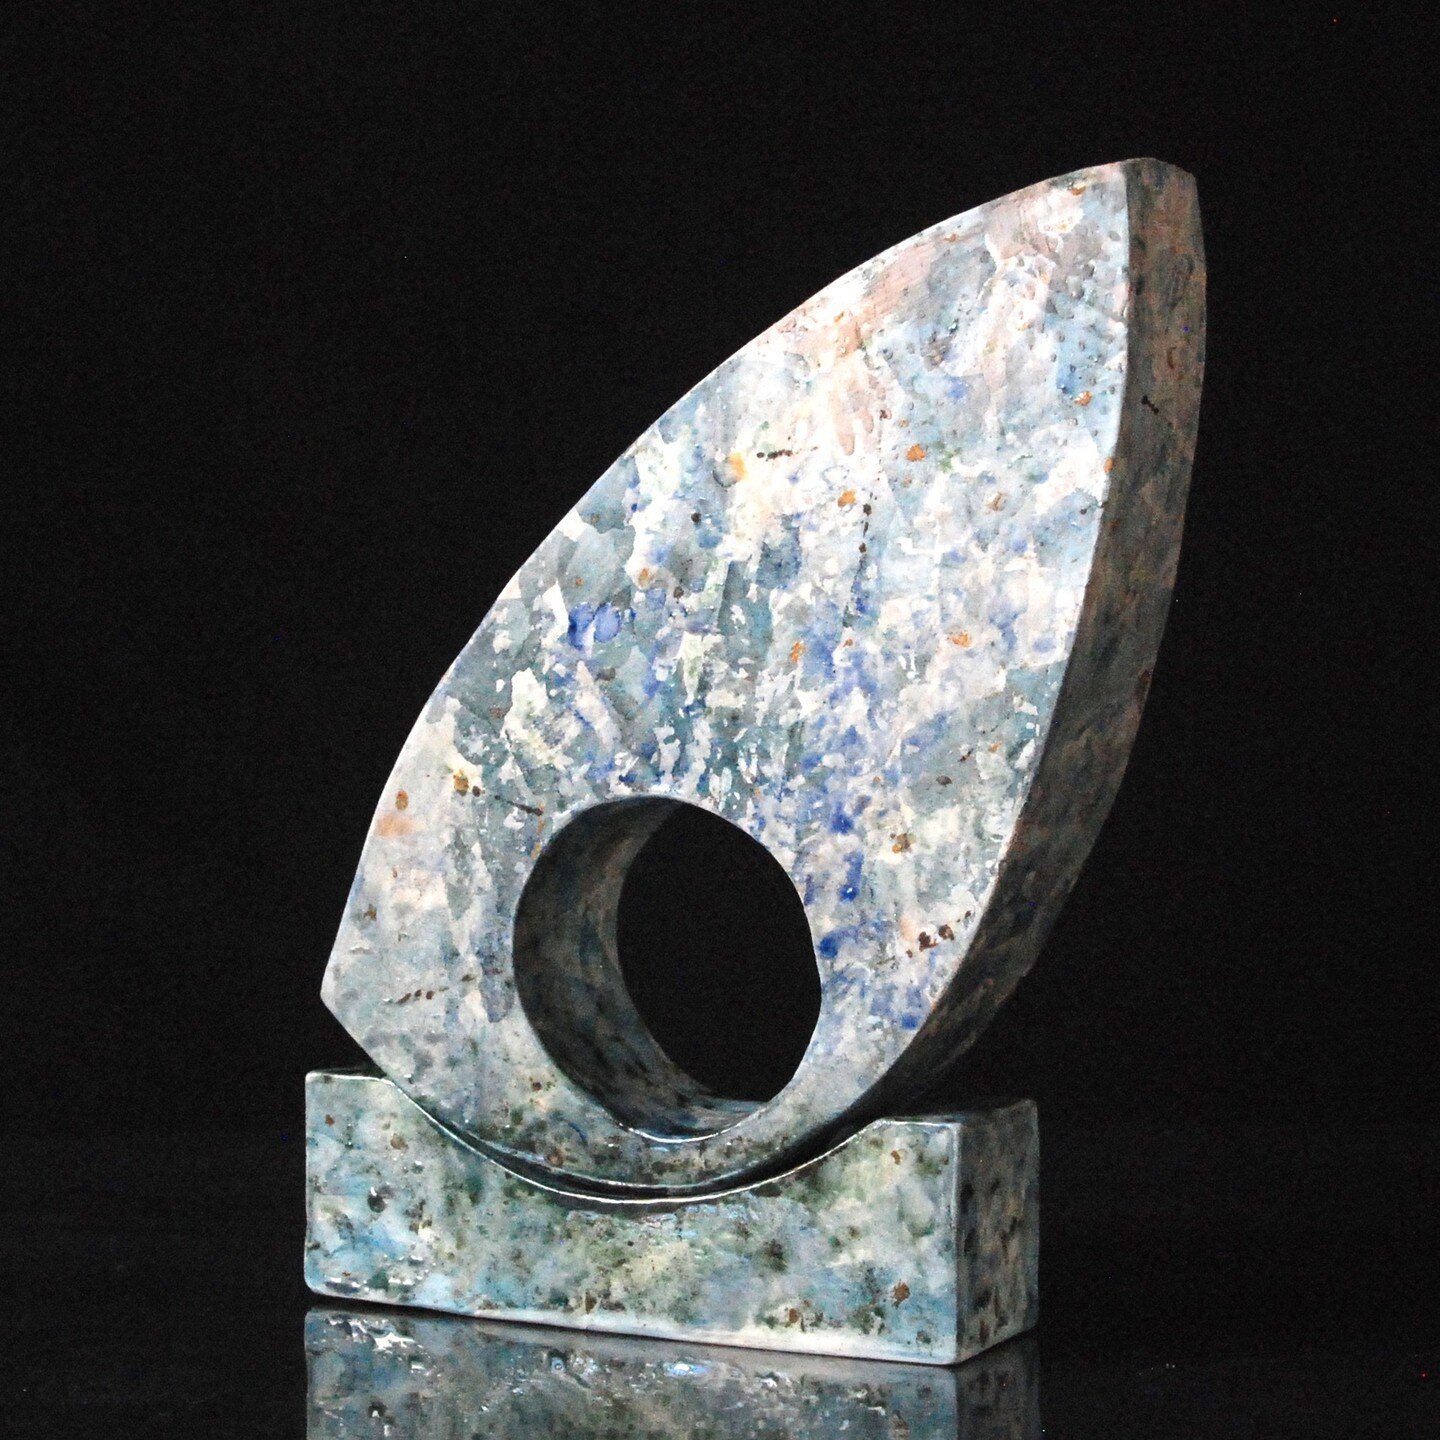 One of my Moorland series, suggesting wild weather and balanced stones.
#KatharineBarker #ceramicsculpture #Penzance #ceramics #Penwith #moorlands #stoneware #slabbuilt